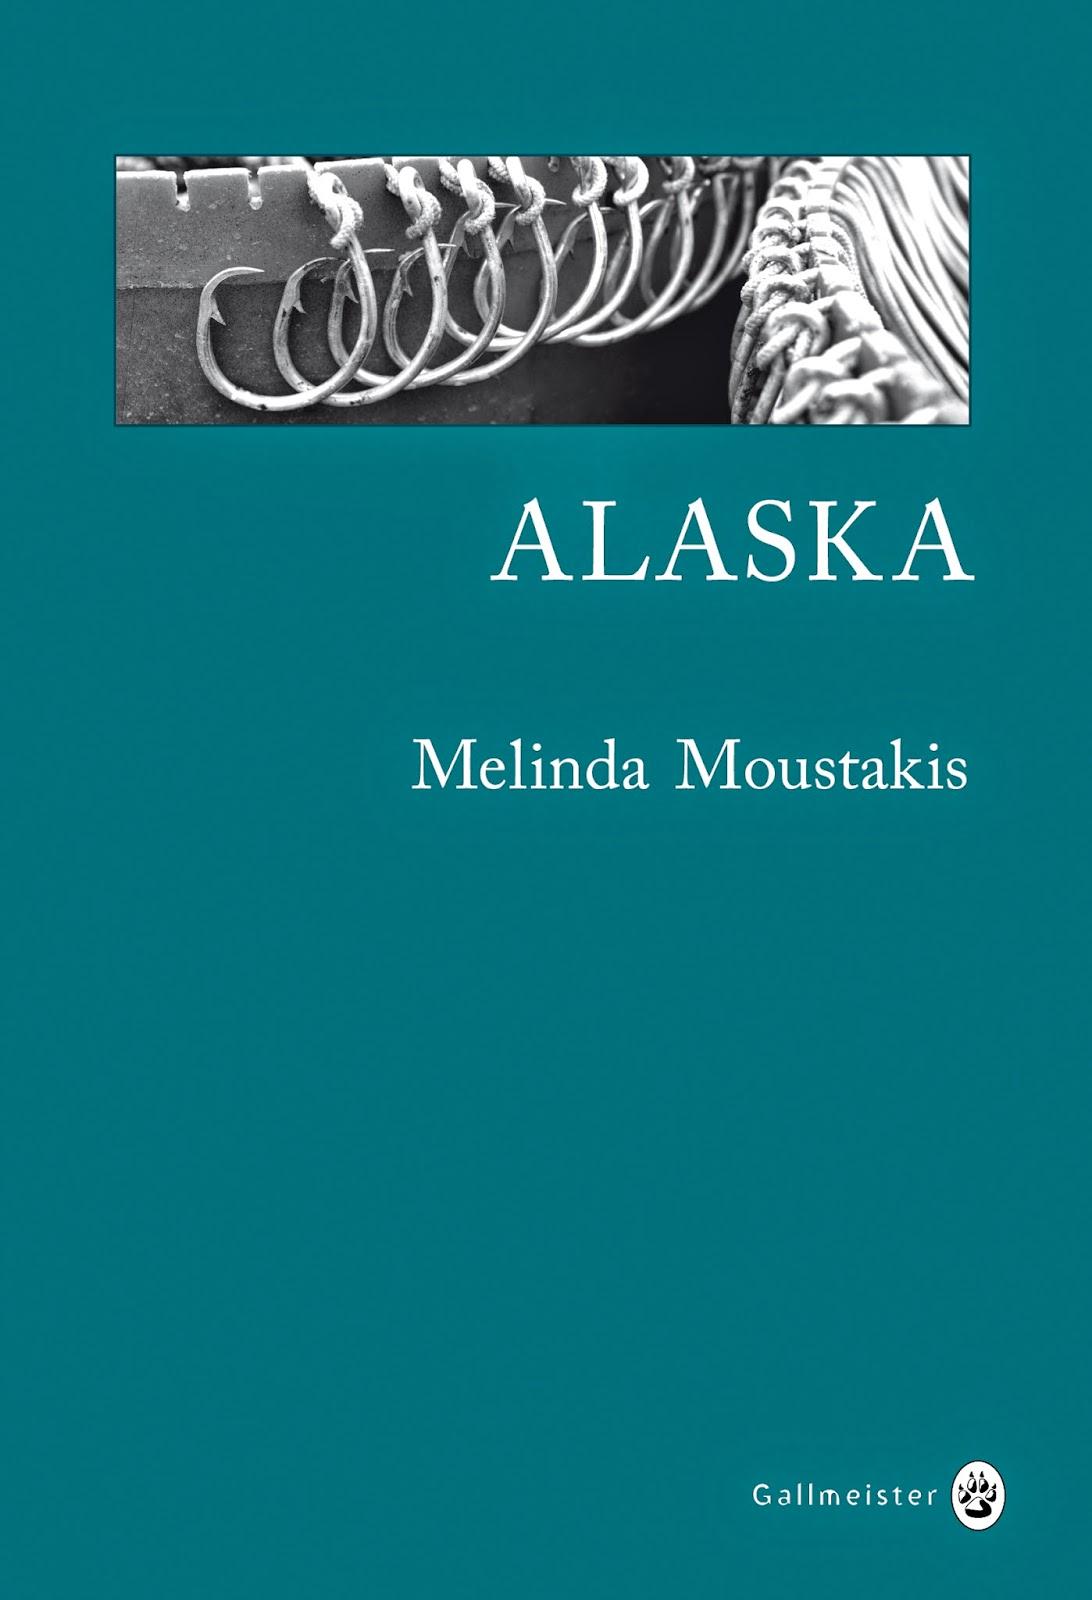 Alaska - Melinda Moustakis